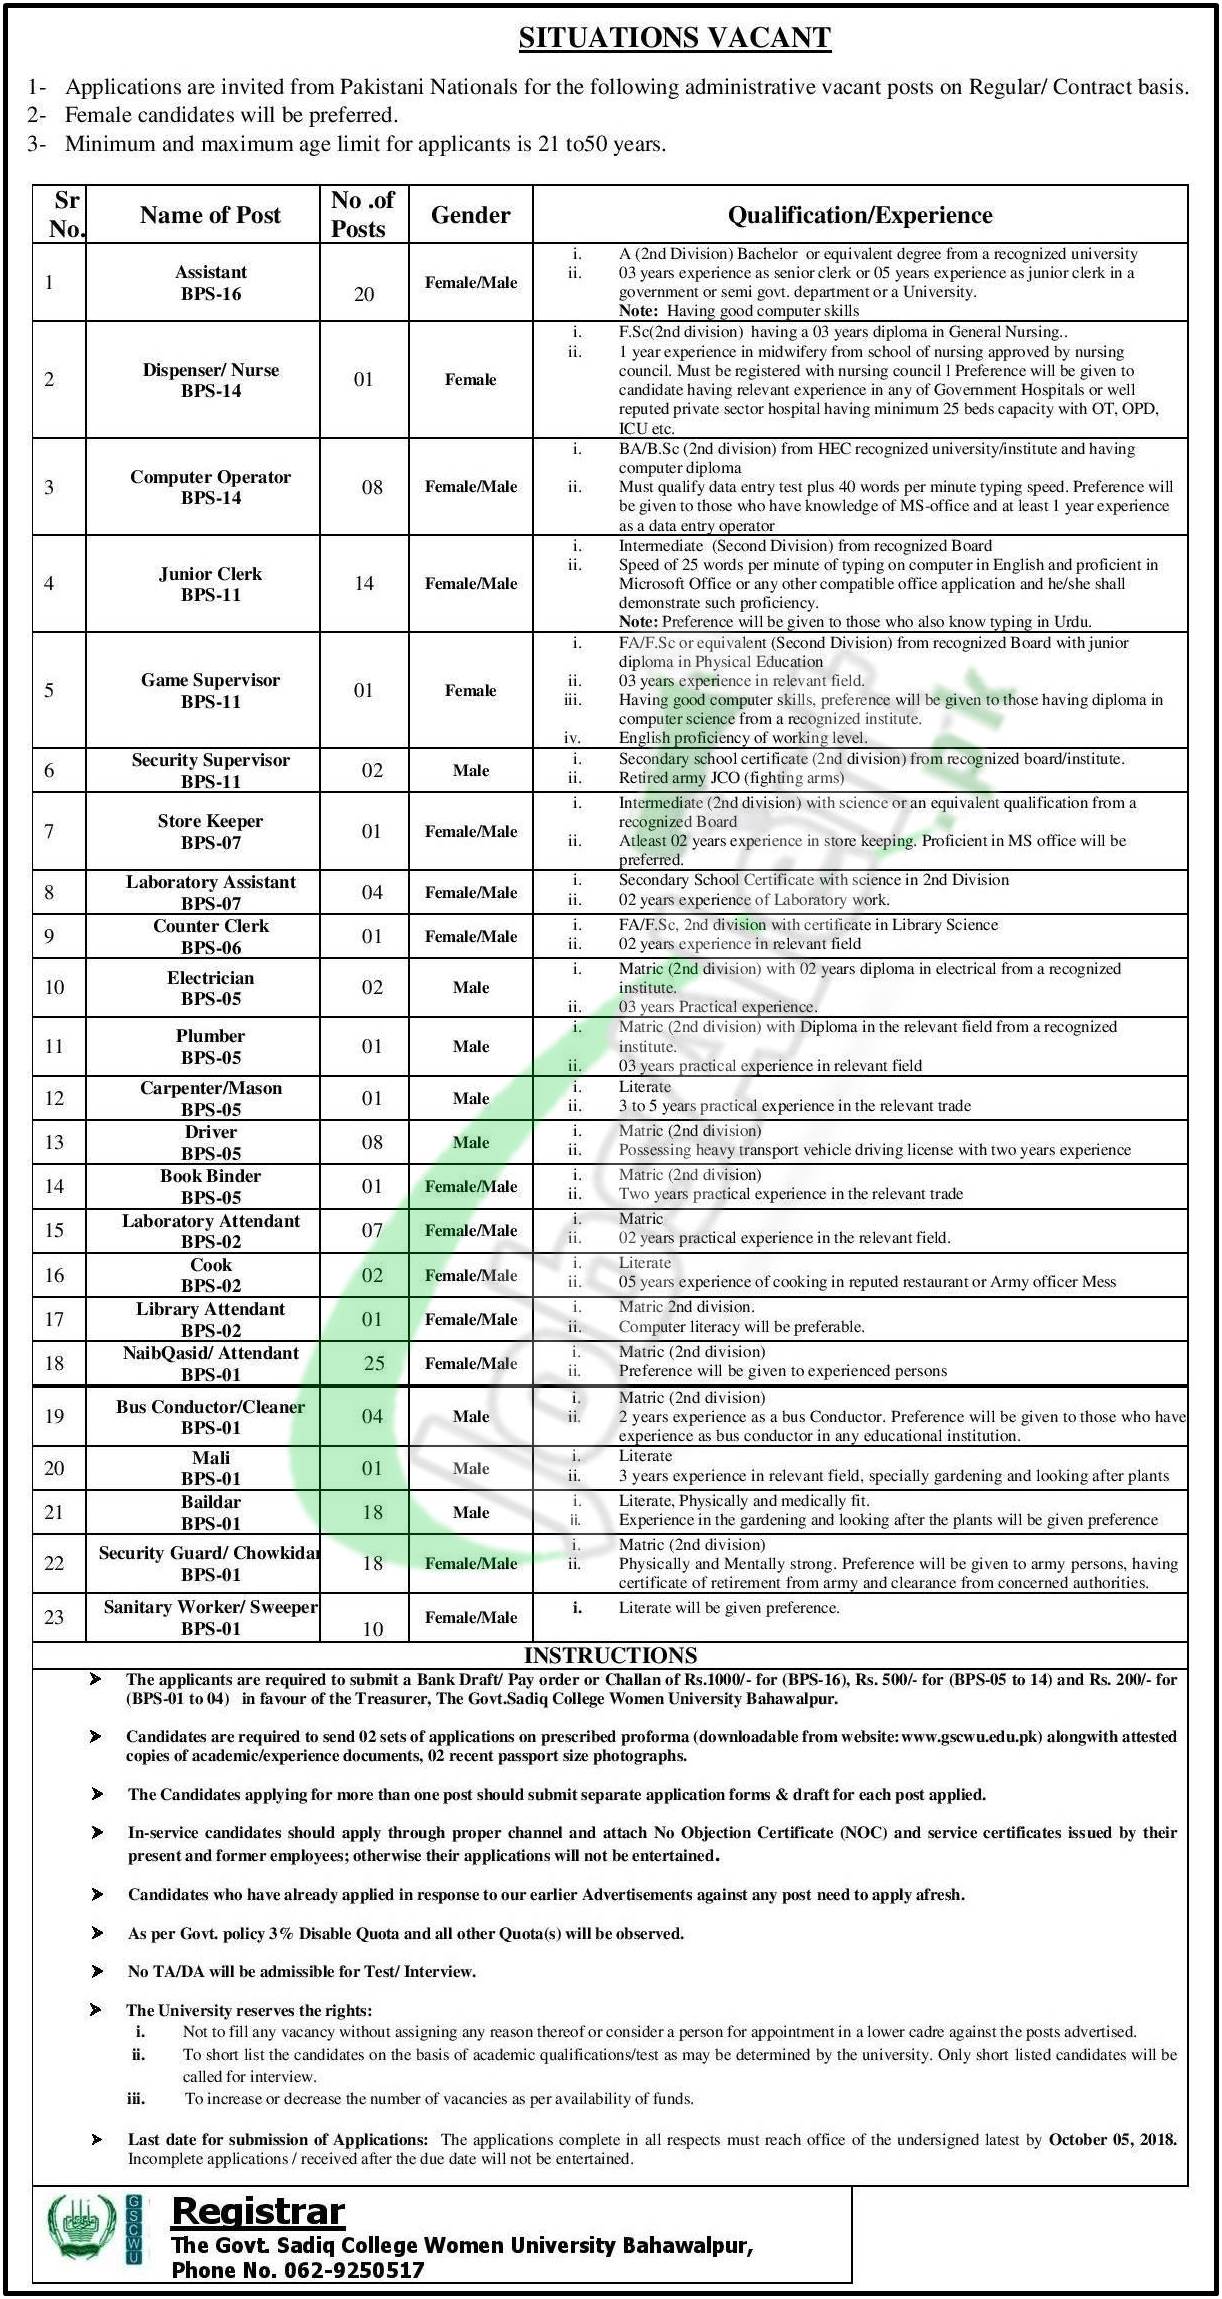 Govt Sadiq College University Bahawalpur Jobs 2018